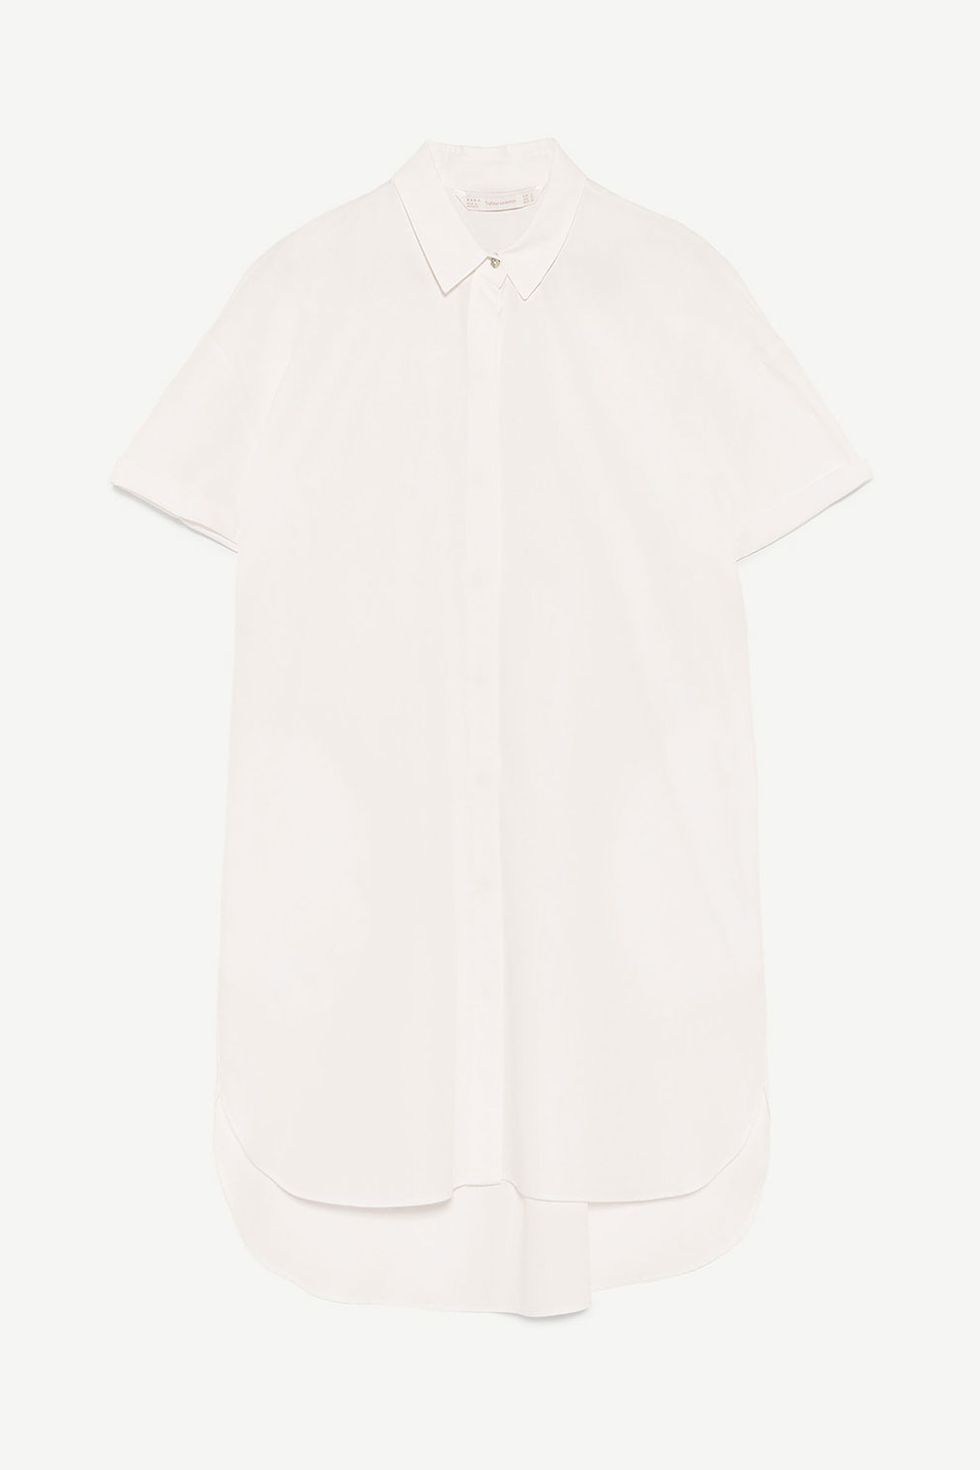 Product, Collar, Sleeve, White, Carmine, Baby & toddler clothing, Active shirt, Clothes hanger, Polo shirt, Button, 